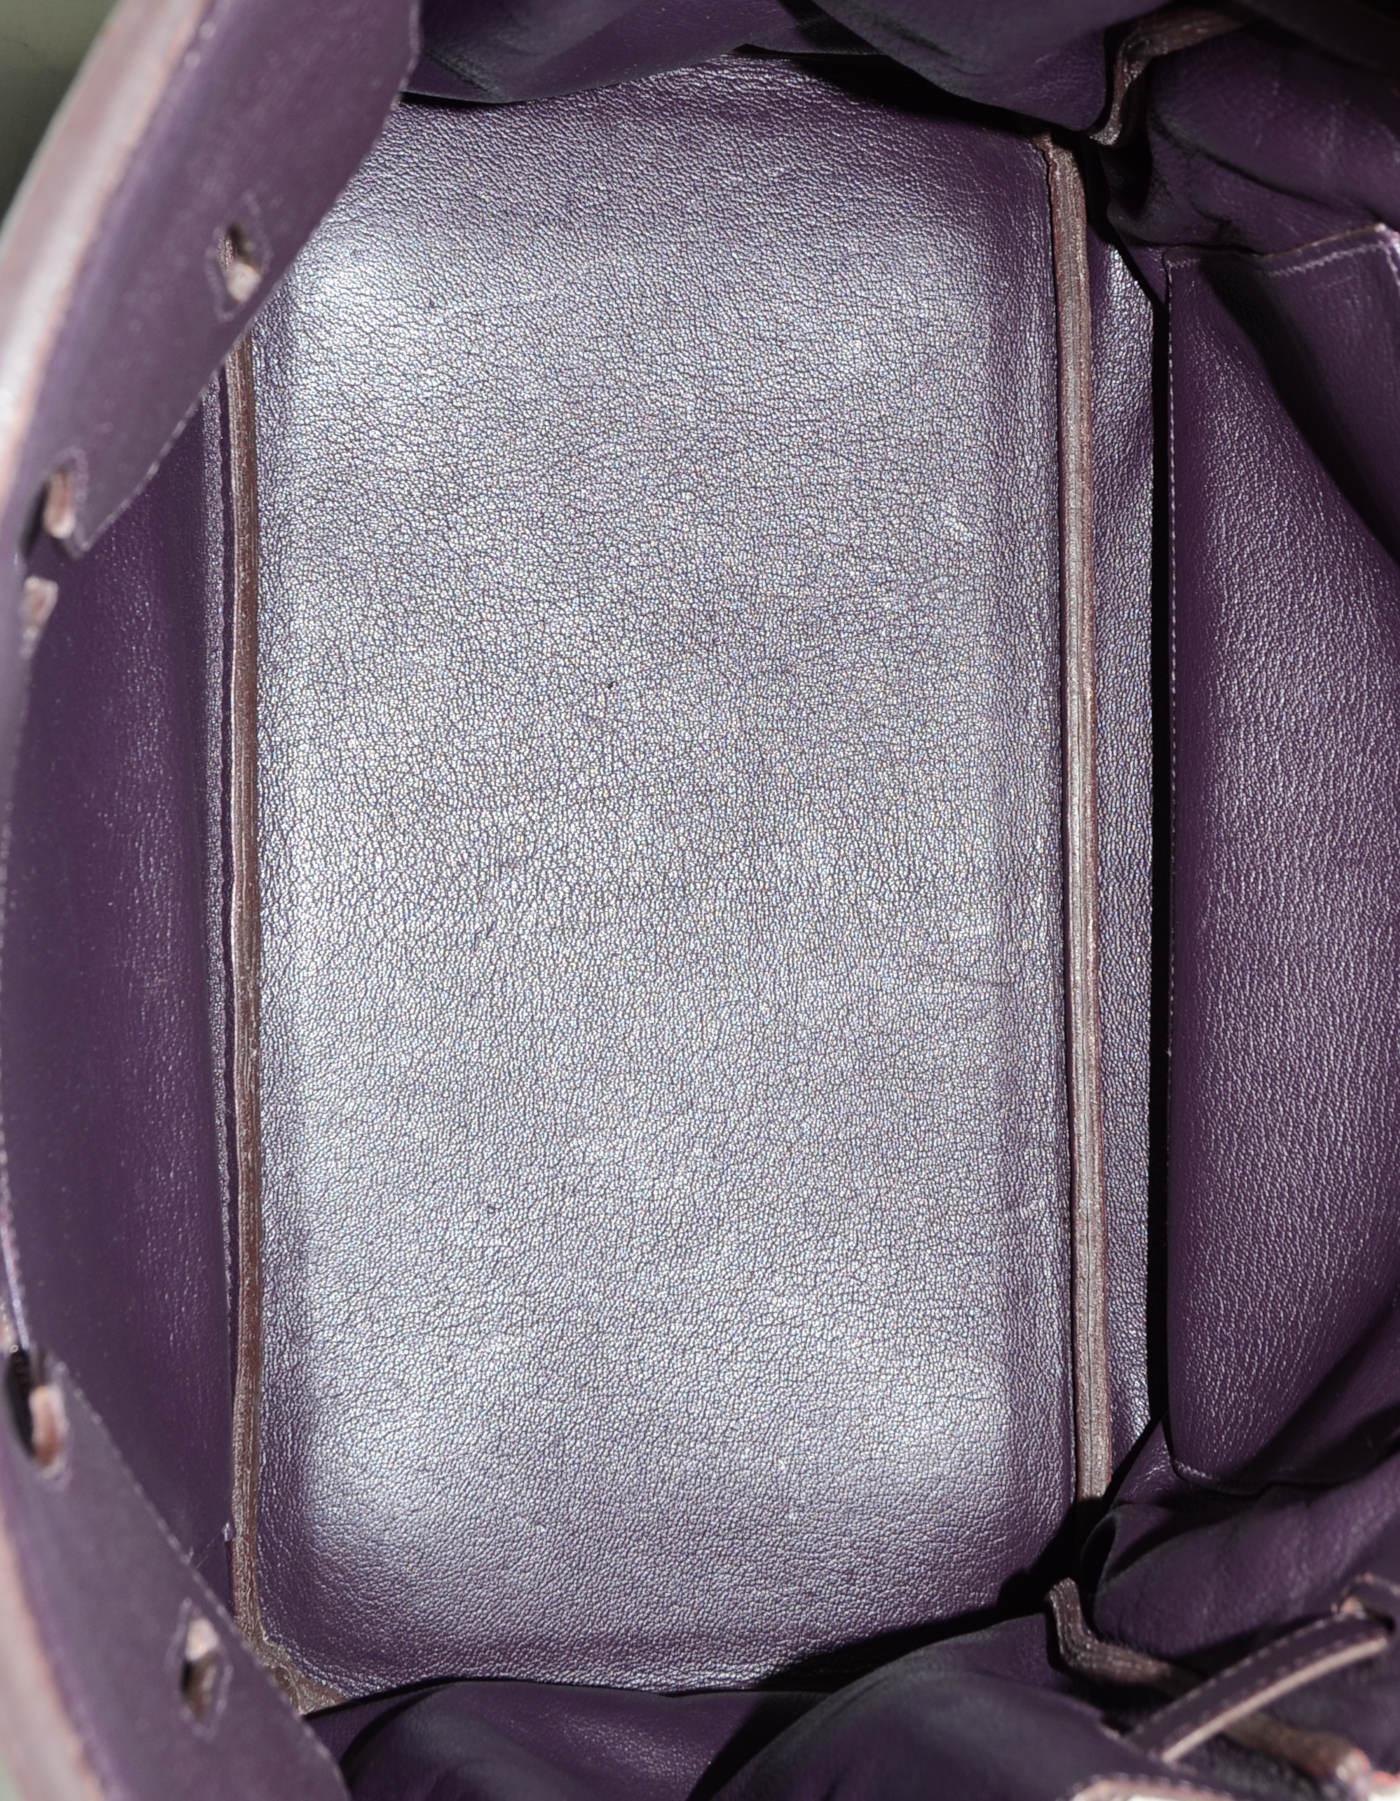 Black Hermes Purple Togo Leather 35cm Birkin Bag with Palladium Hardware